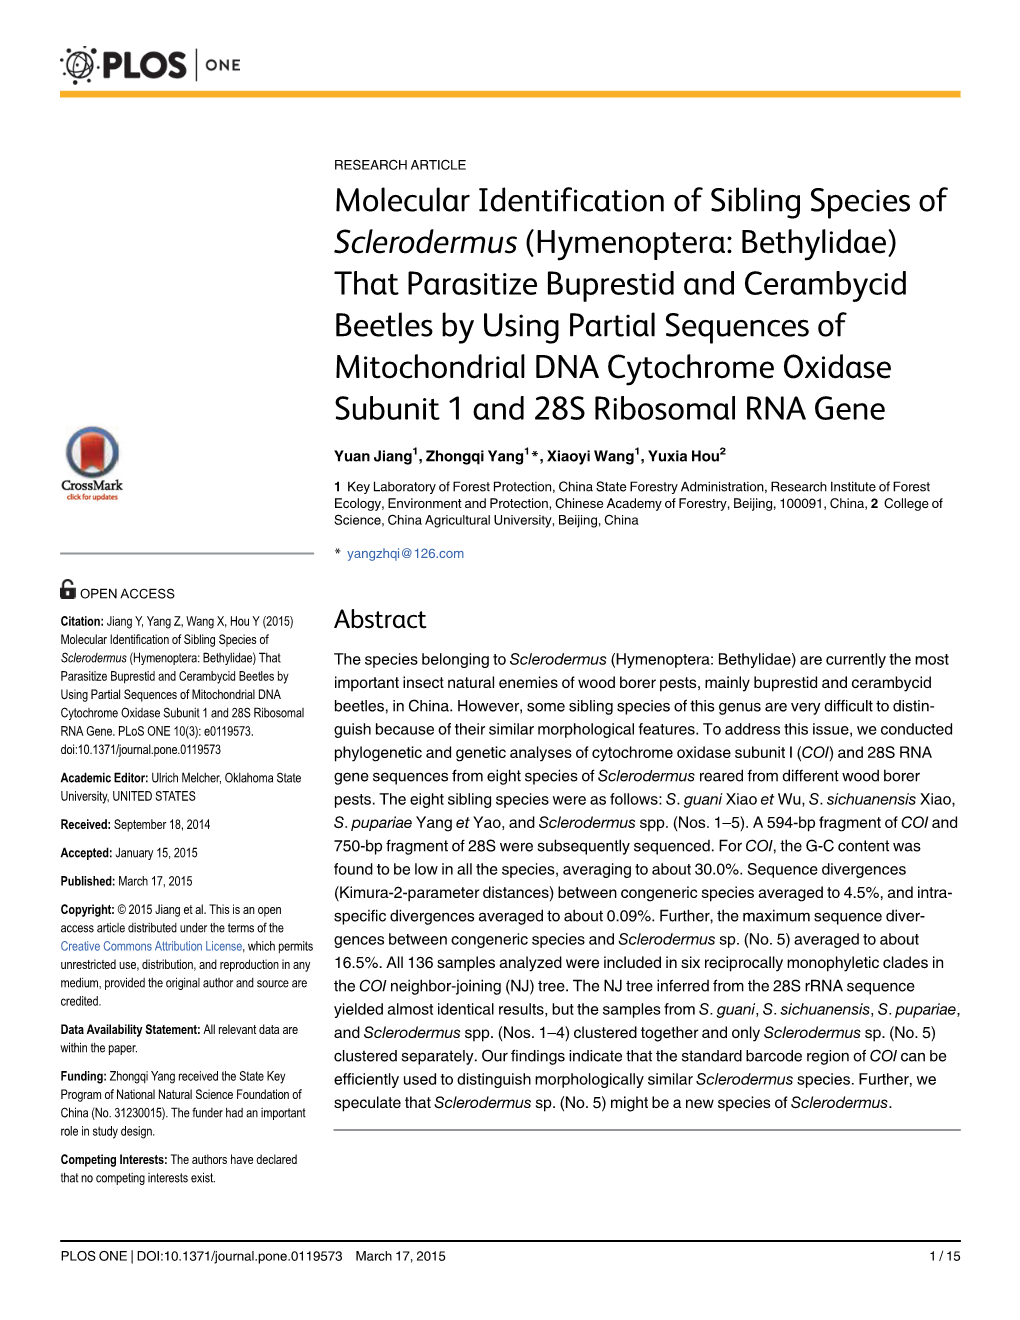 Molecular Identification of Sibling Species of Sclerodermus